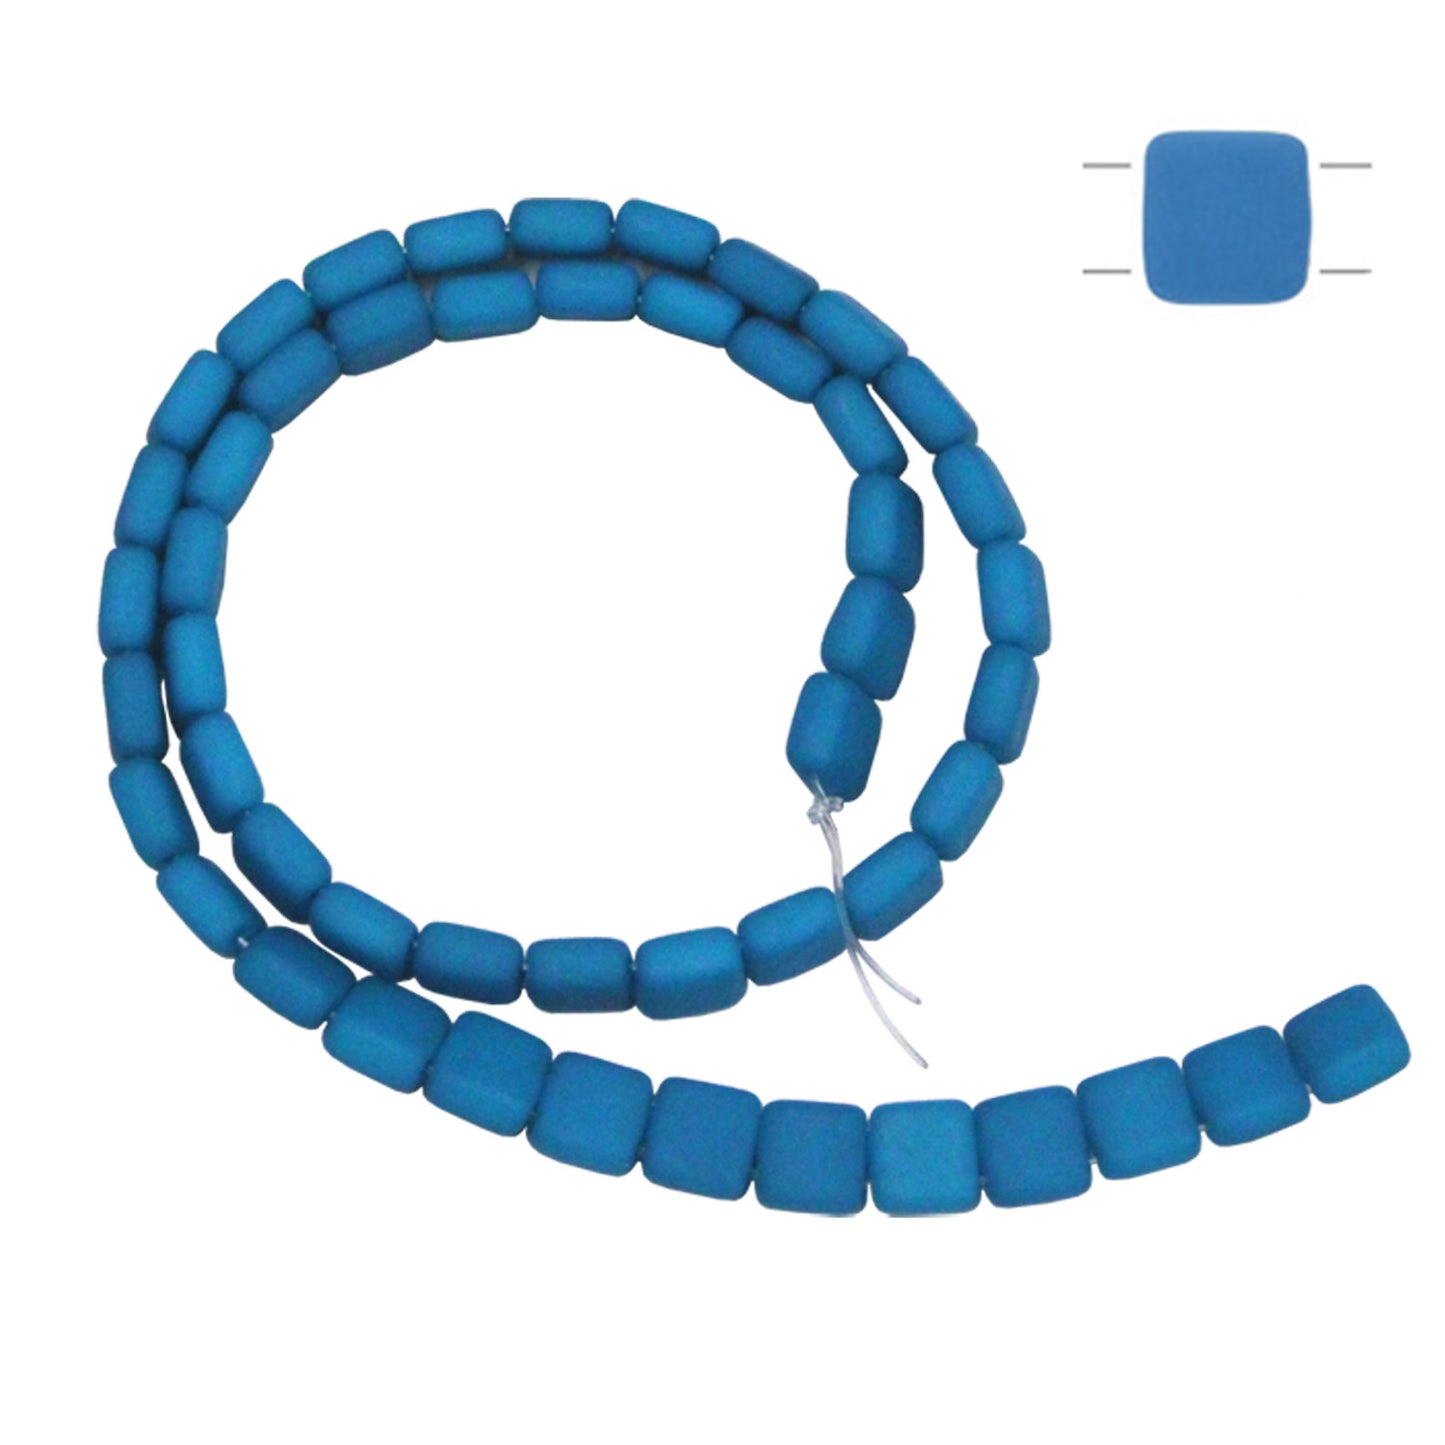 6mm Neon Electric Blue / 2 Hole CzechMates Tile Beads / 50 Bead Strand